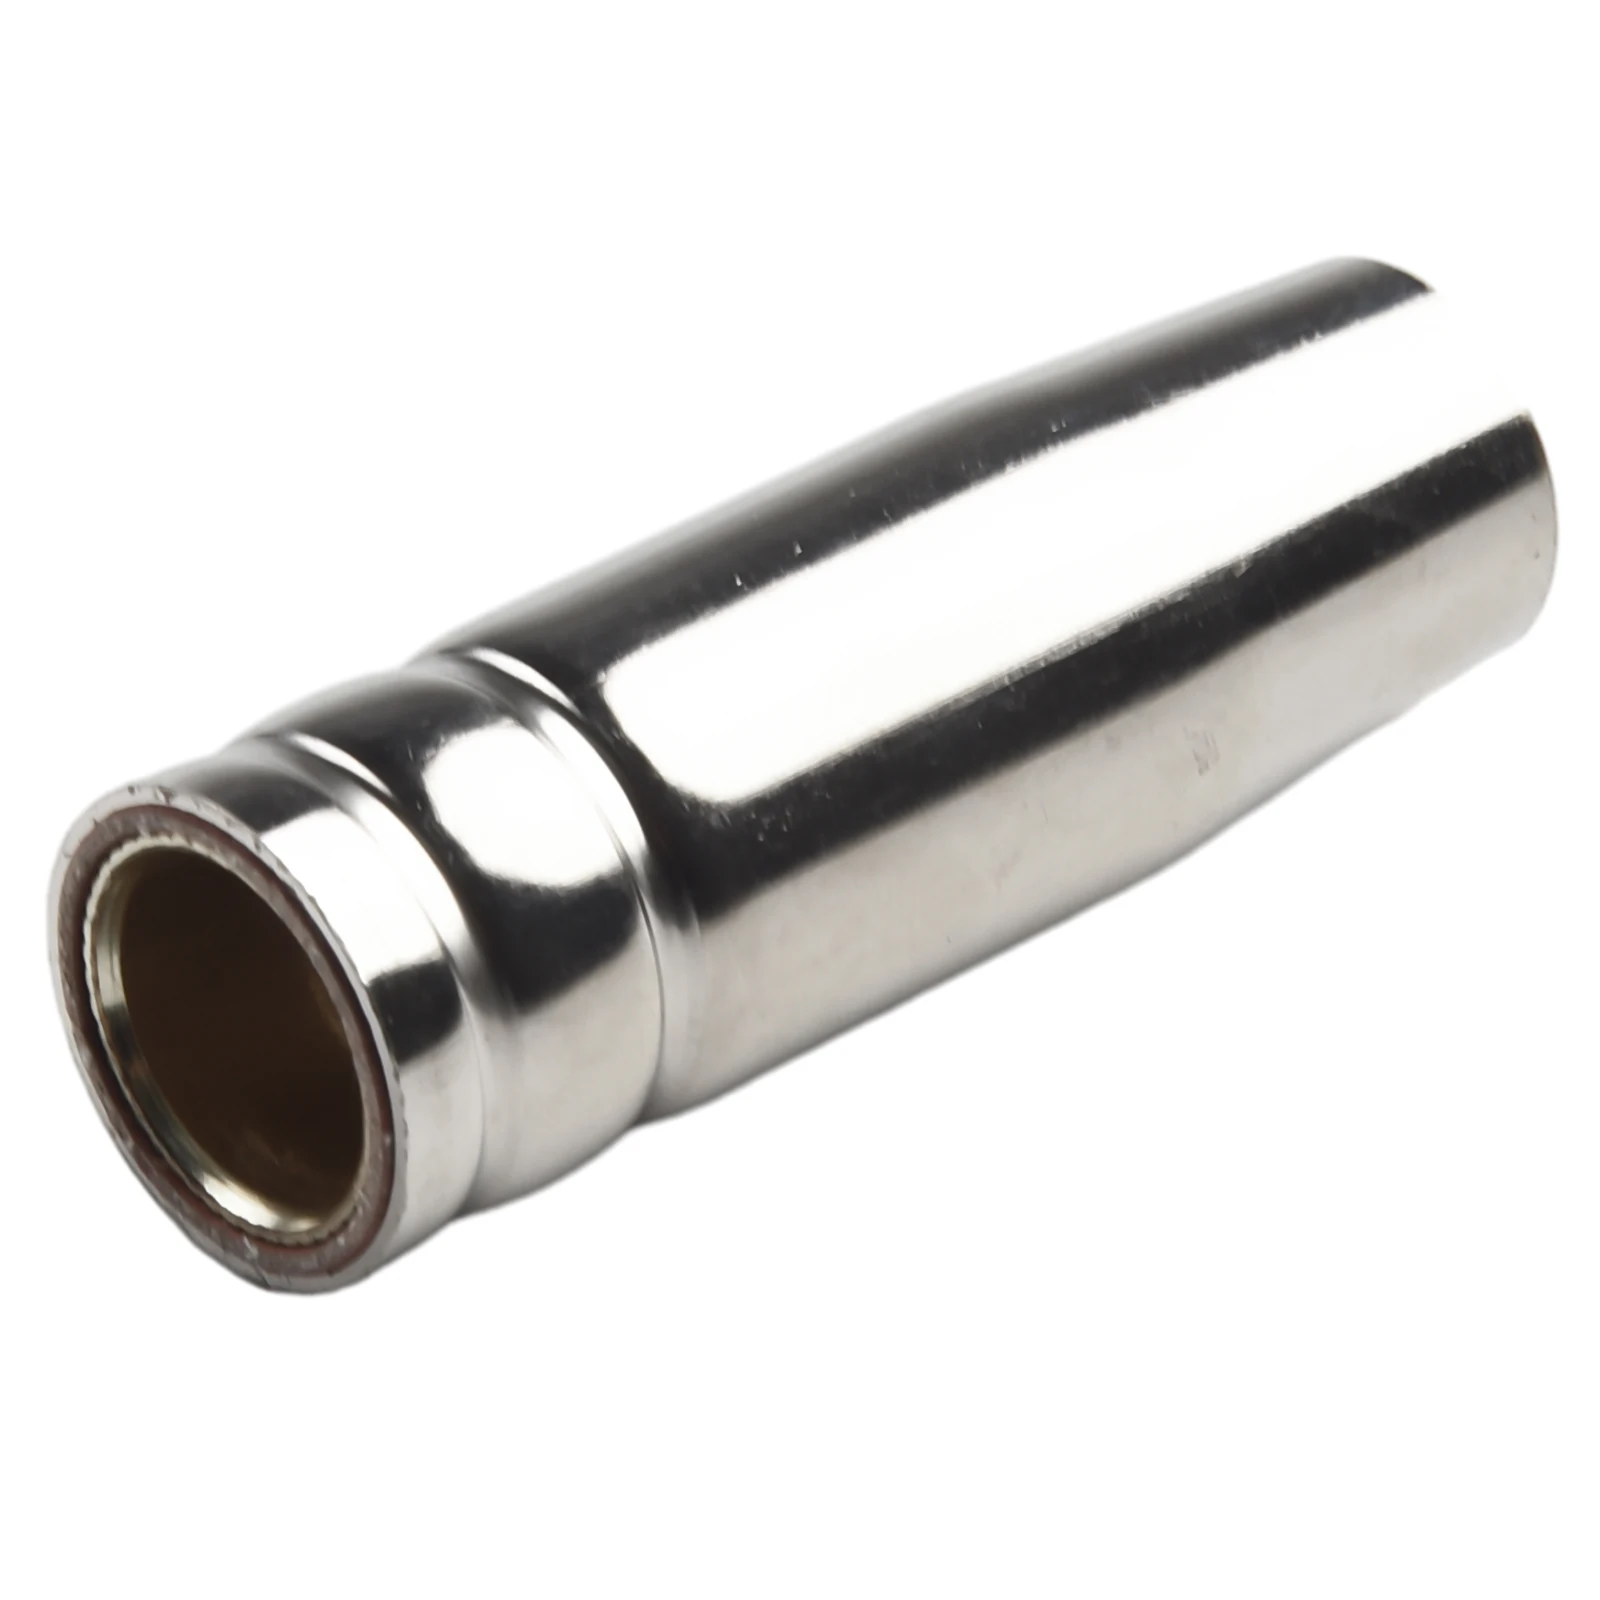 

Contact 15AK MIG Accessories For MIG Welder MIG Welding Torch Nozzles Tips Welding Binzel High Quality Durable